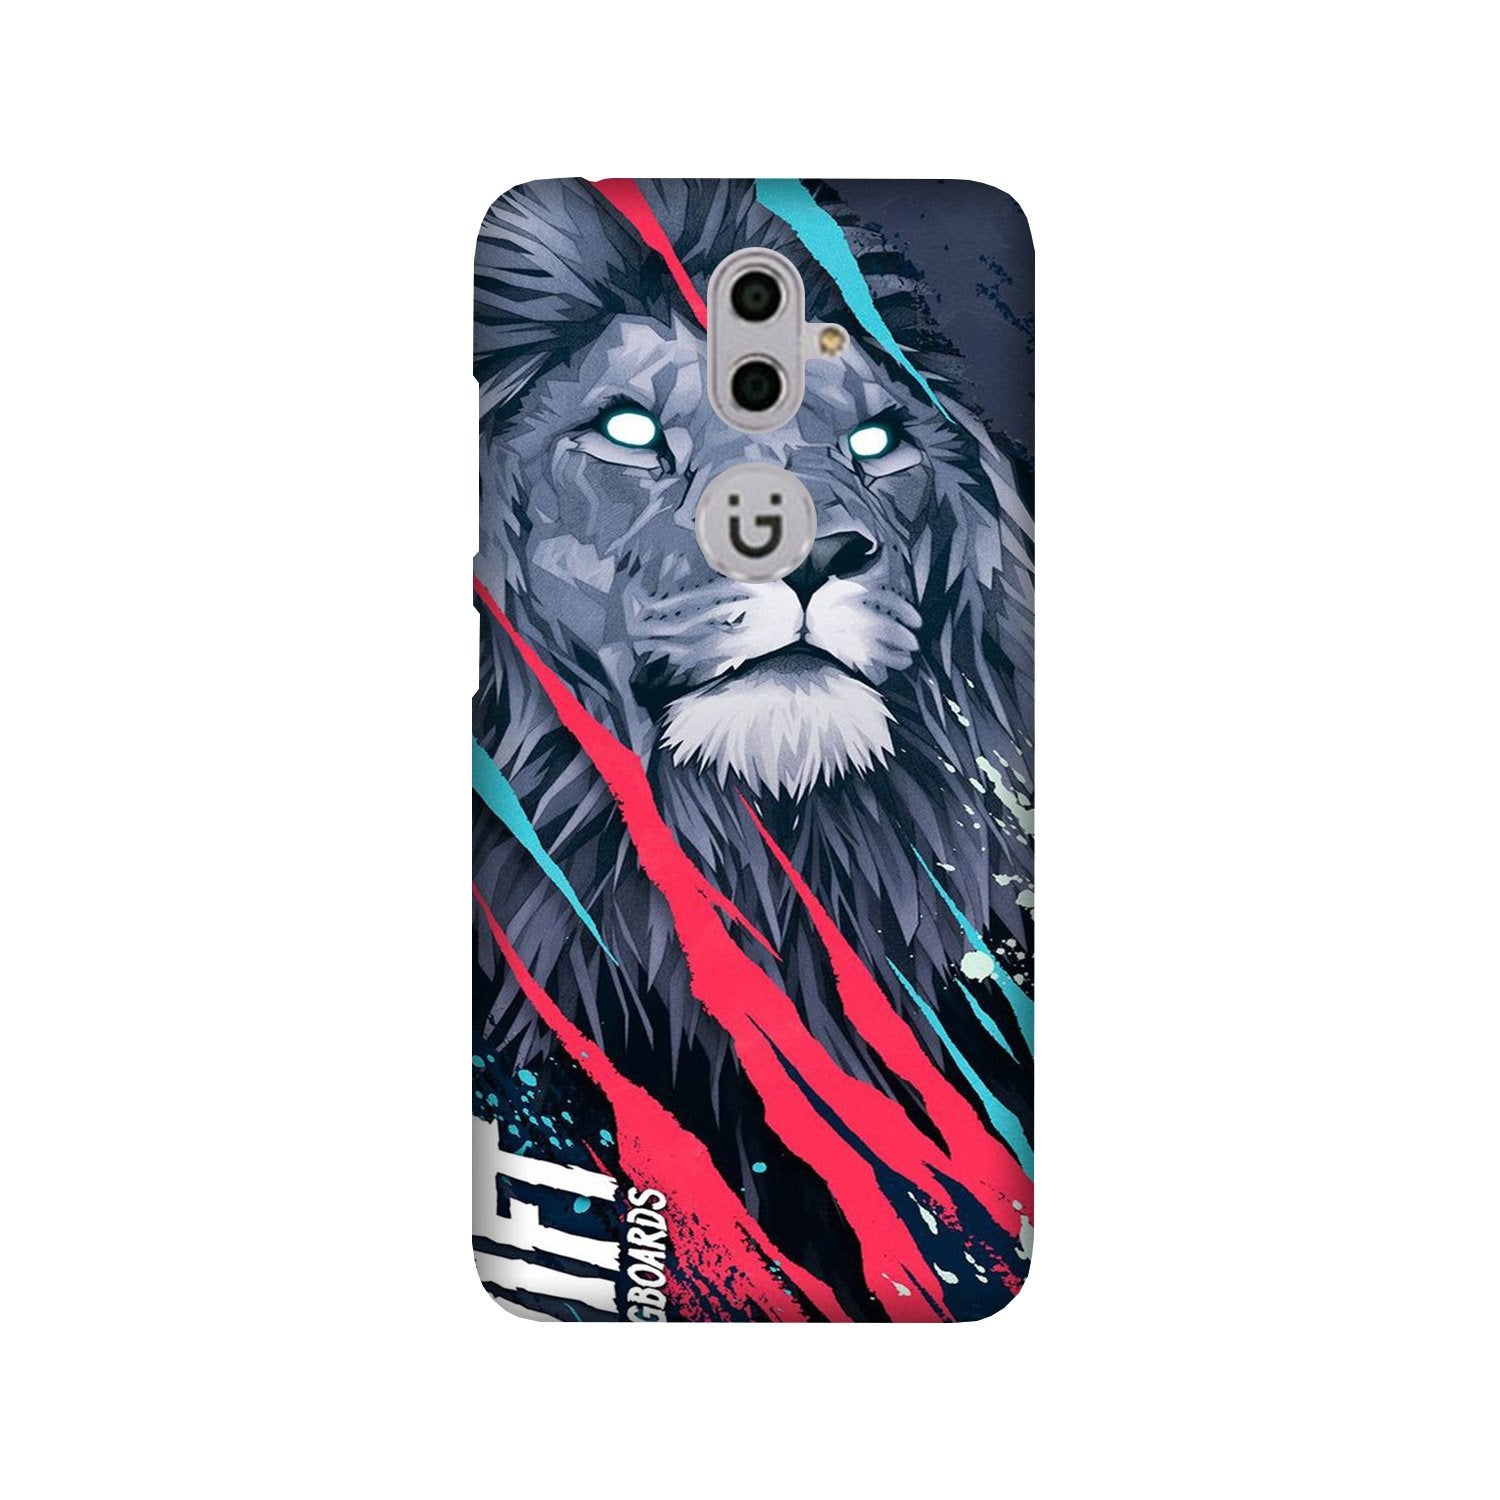 Lion Case for Gionee S9 (Design No. 278)